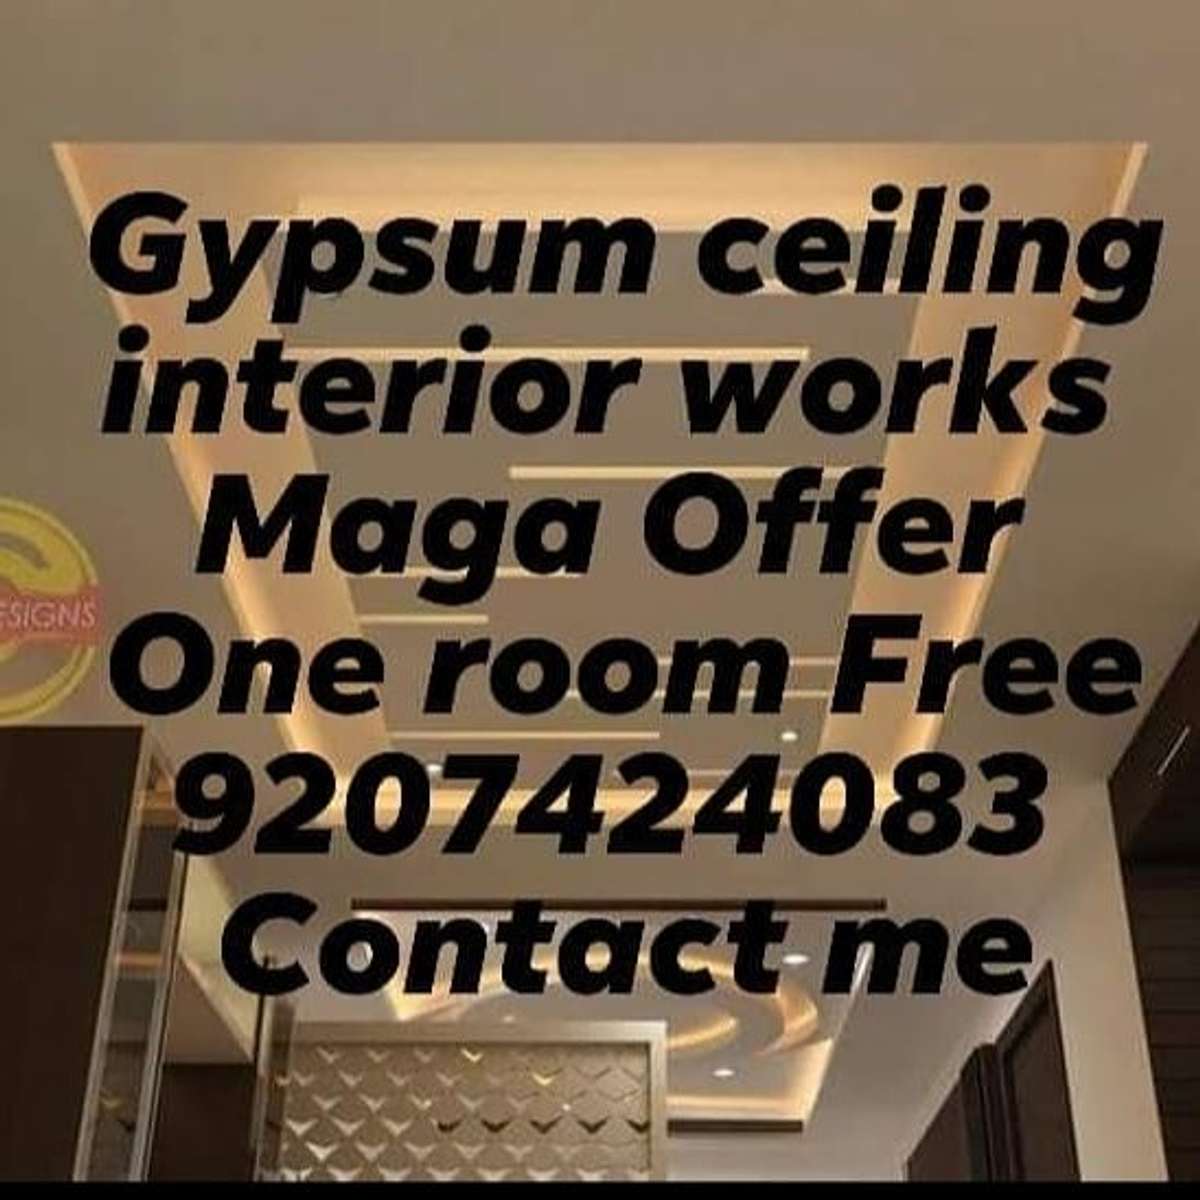 Contact me 